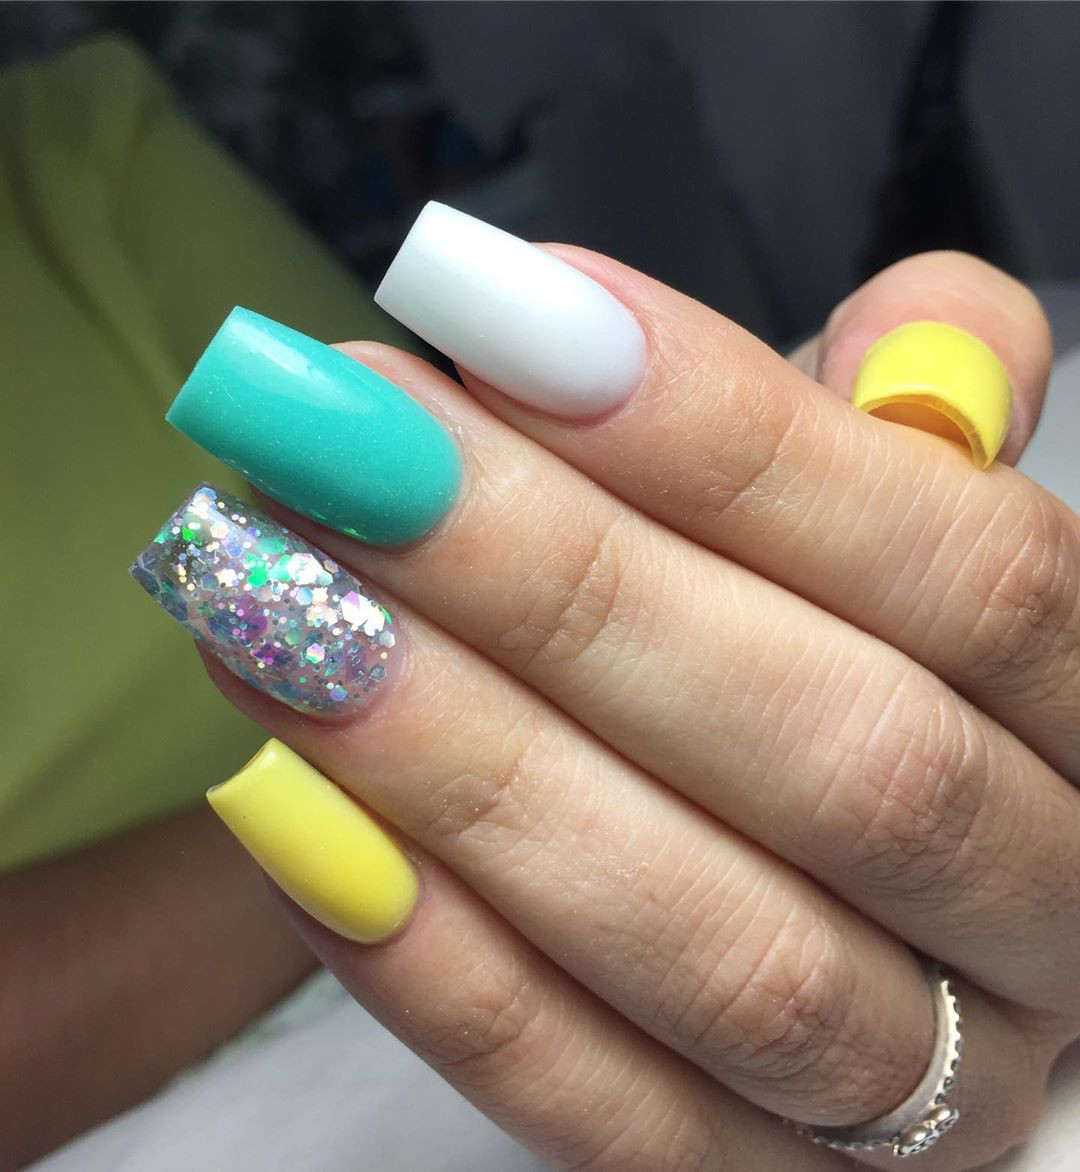 52 Best Dip Powder Nail Color ideas for 2020,dip powder nail color ideas 2019,dip nail colors 2019,dip nail designs for fall,dip nail designs for winter